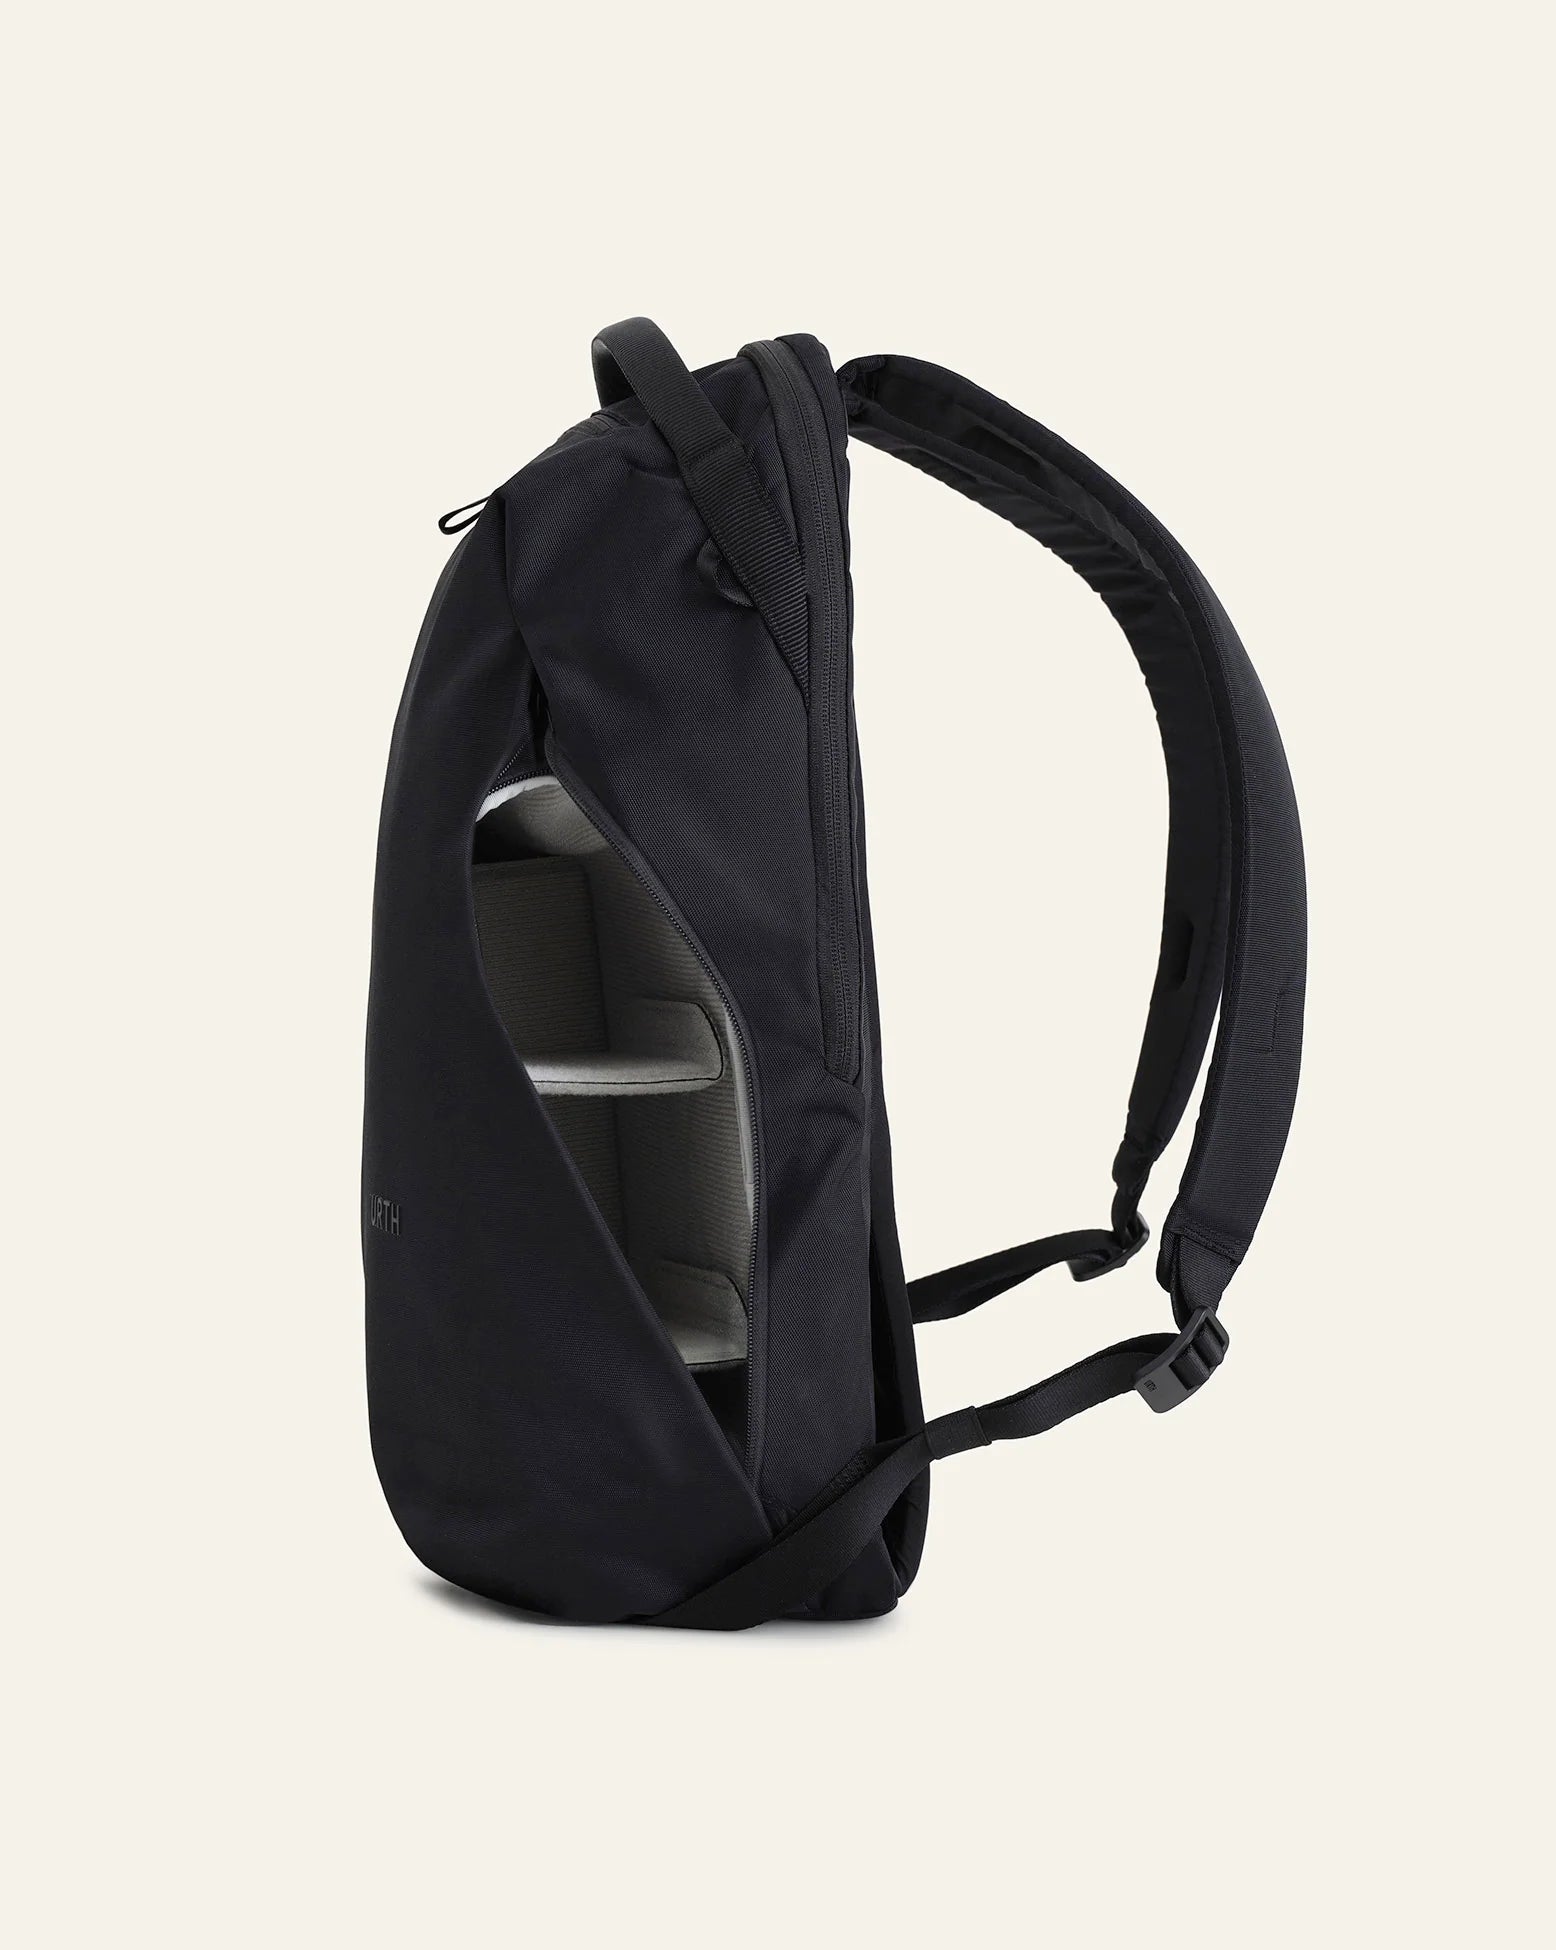 Urth Norite 24L Backpack + Camera Insert (Onyx)